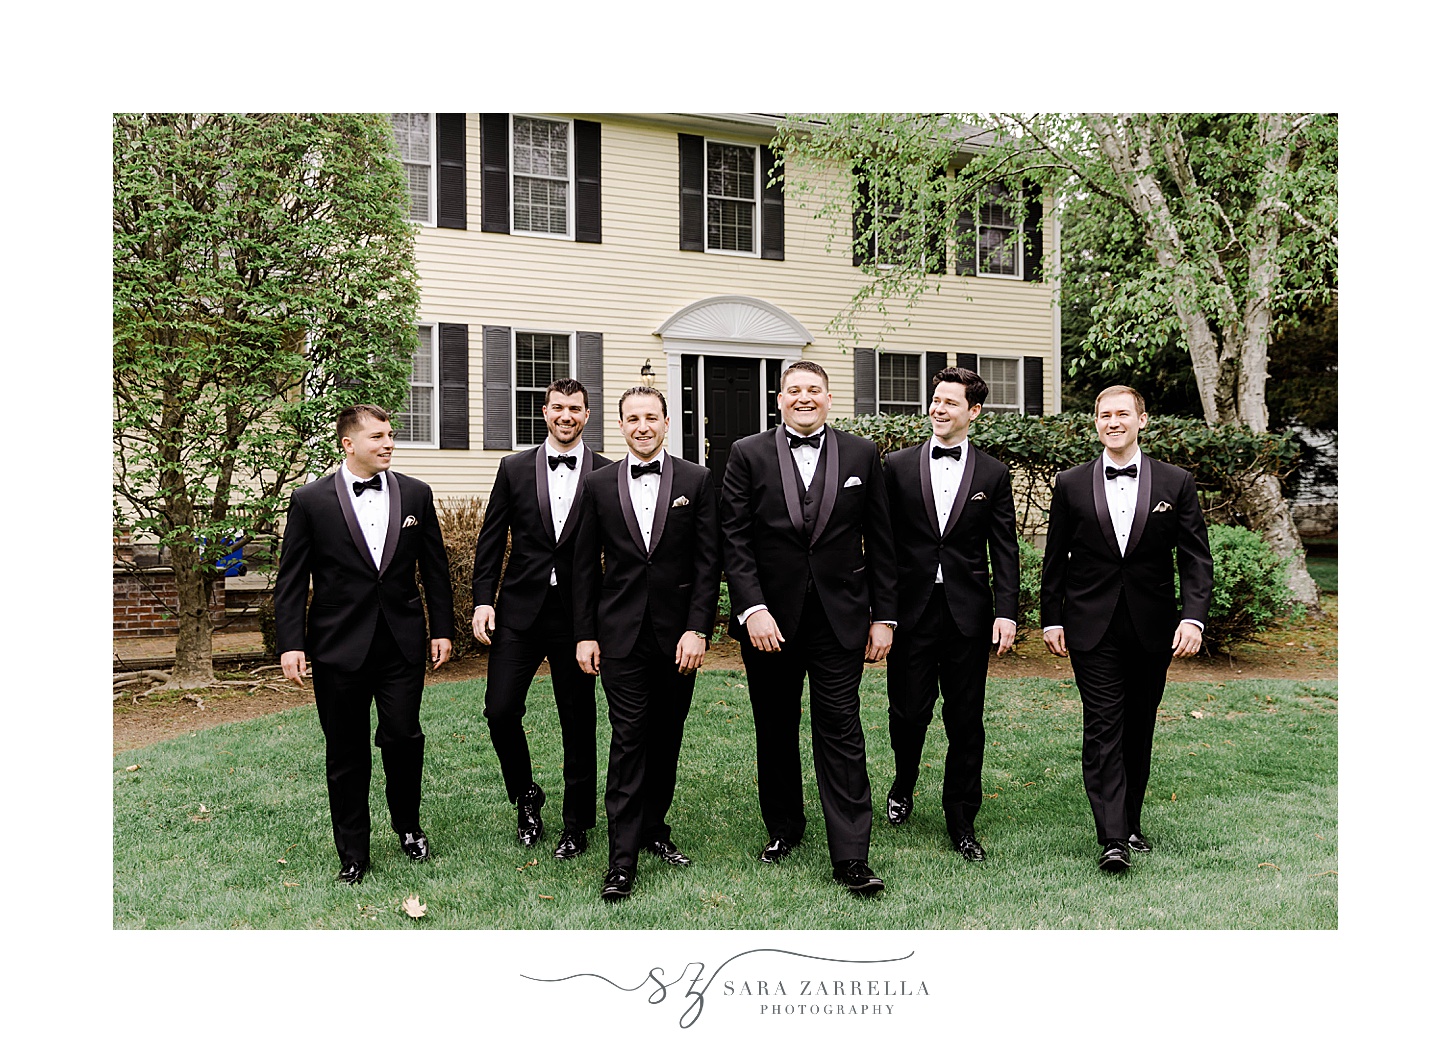 groom walks with groomsmen on lawn in classic black suits